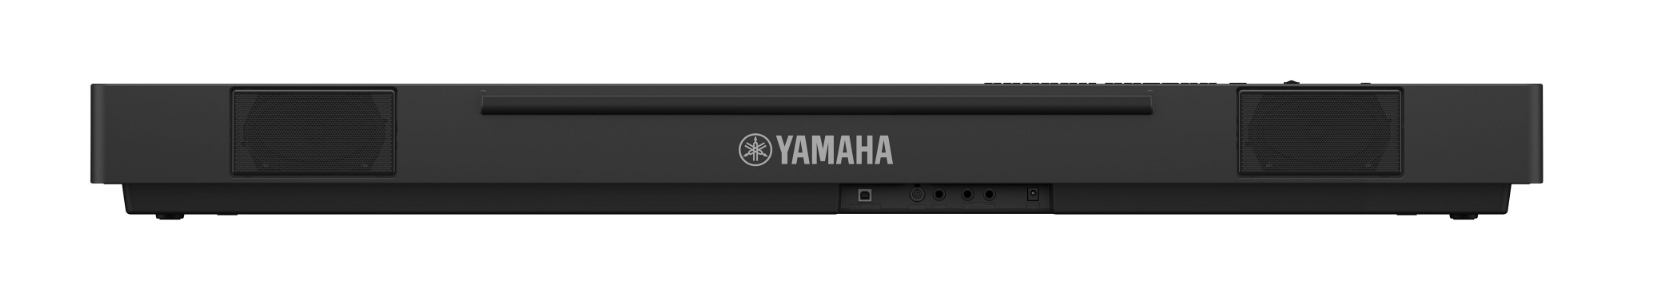 Yamaha P-225 Digital Piano - Black